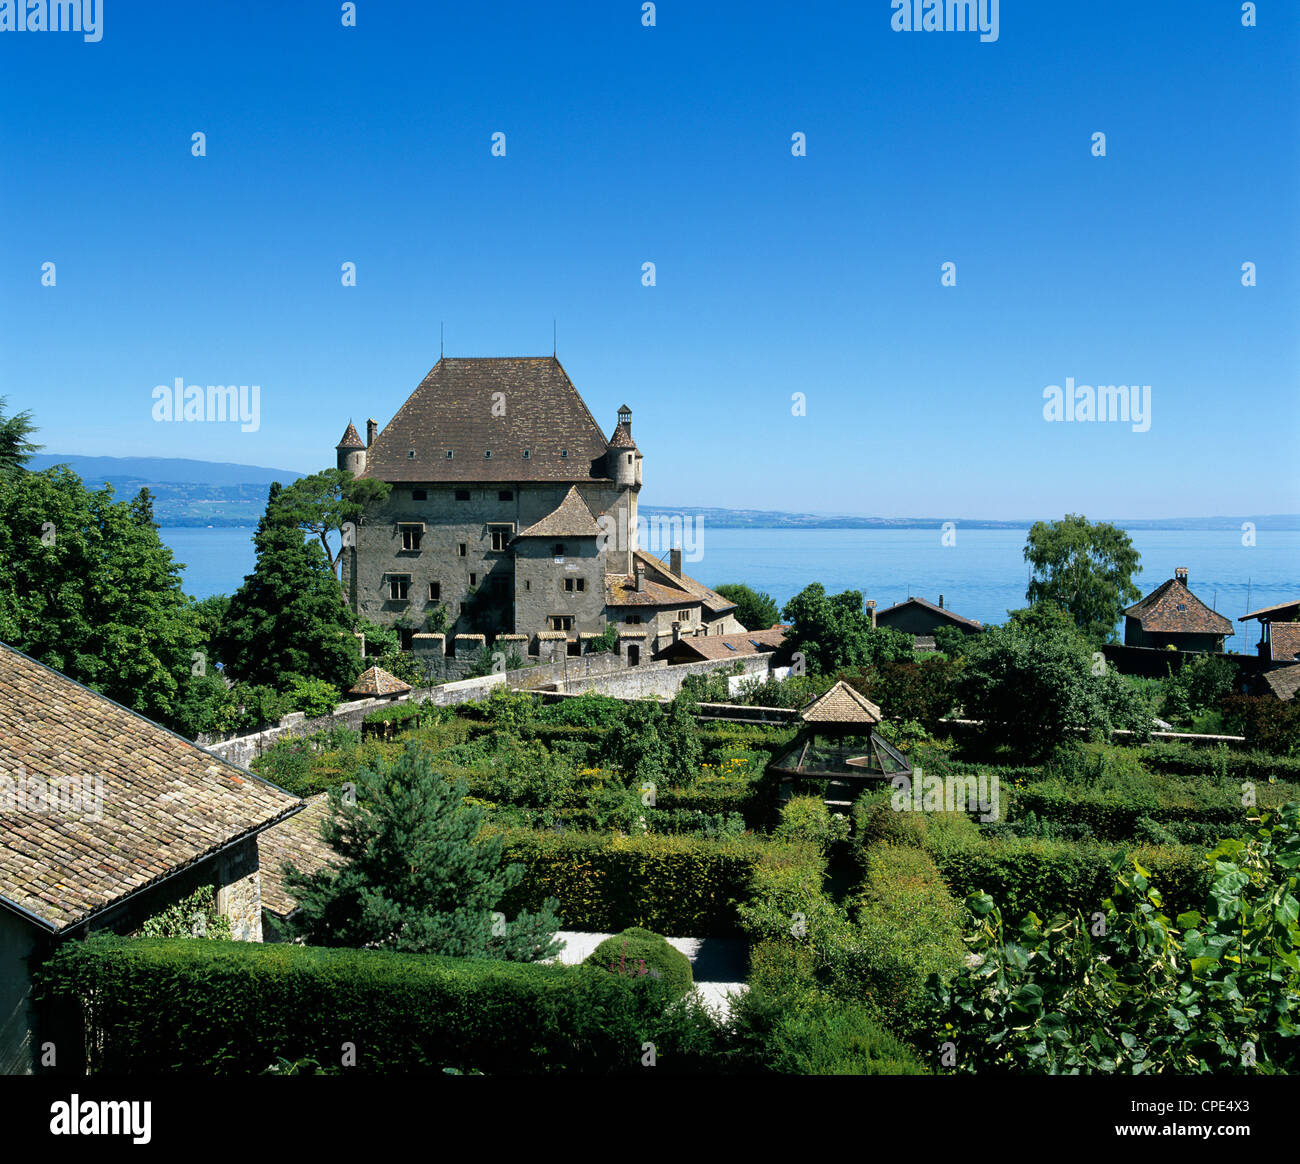 The Chateau and Jardin des Cinq Sens (Garden of the Five Senses), Yvoire, Lake Geneva (Lac Leman), Rhone Alpes, France, Europe Stock Photo